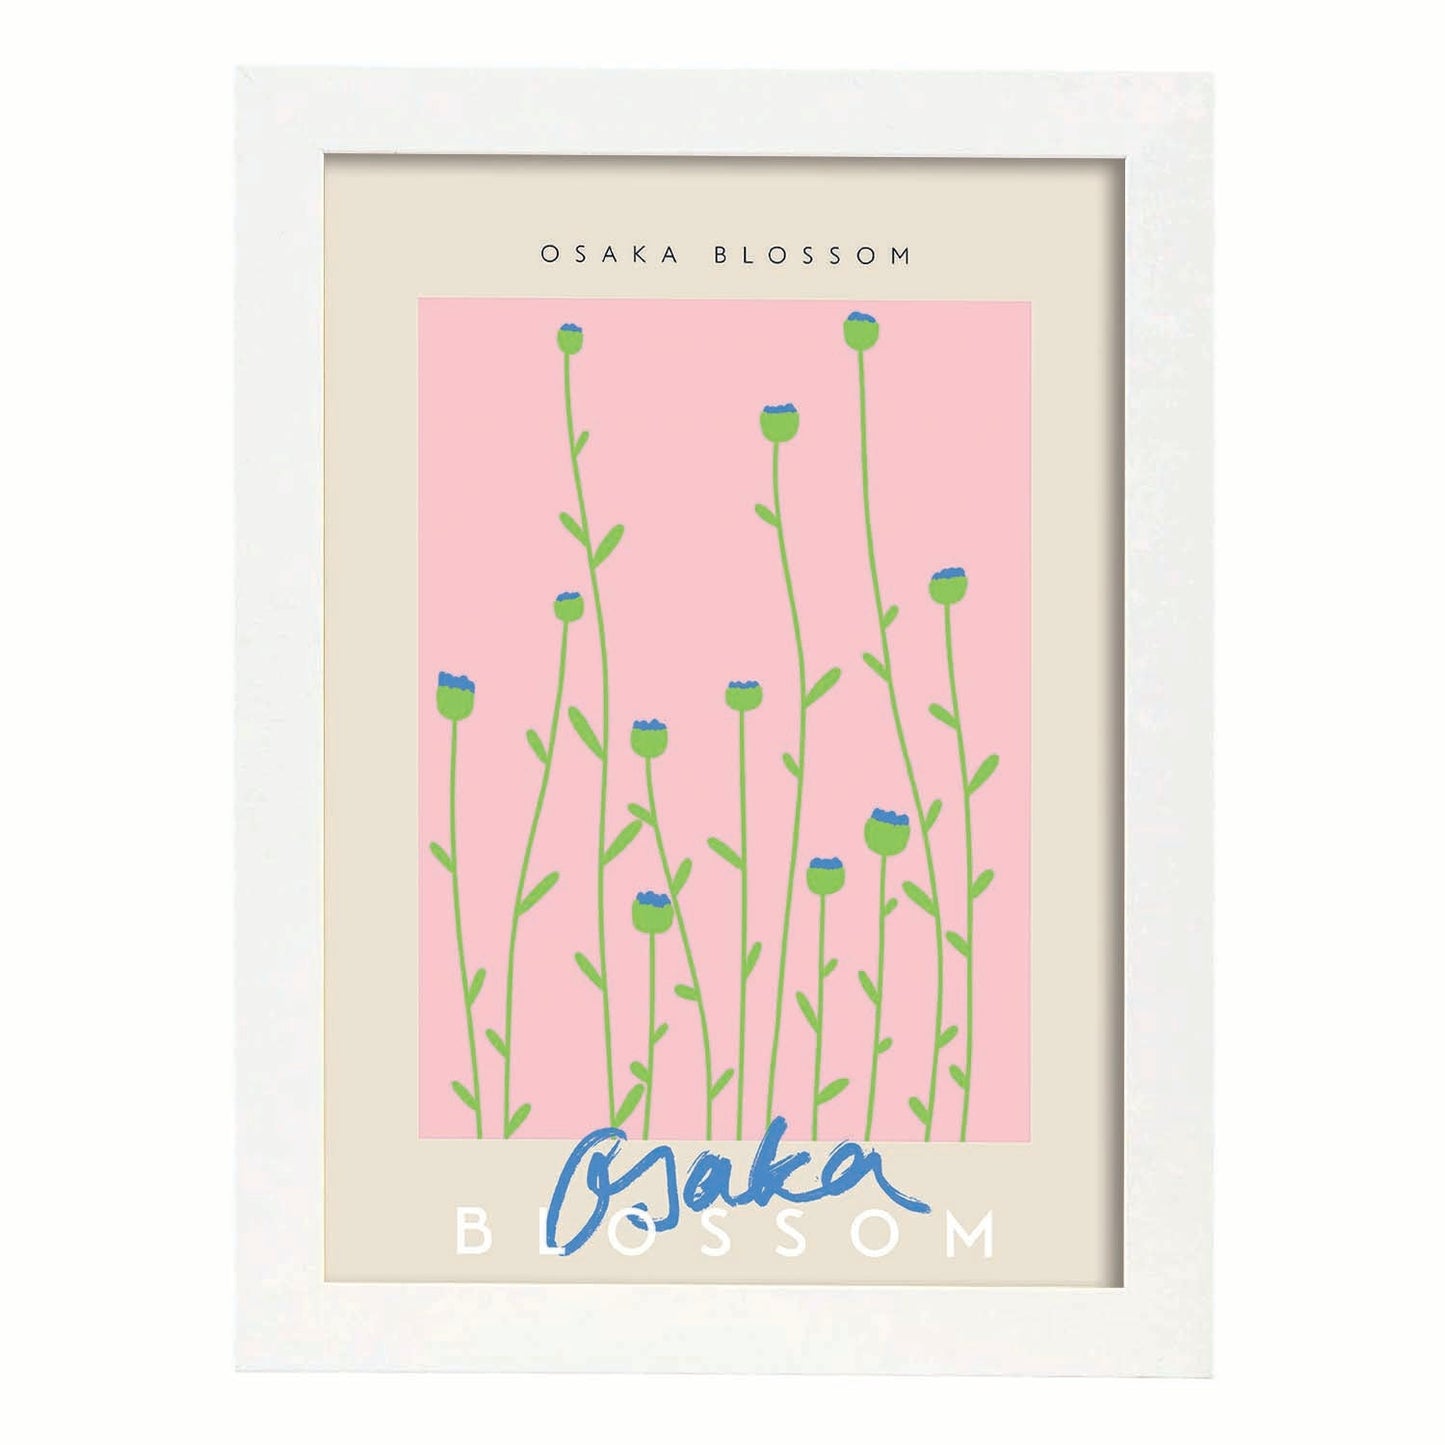 Lamina artistica decorativa con ilustración de Osaka Blossom-Artwork-Nacnic-A4-Marco Blanco-Nacnic Estudio SL